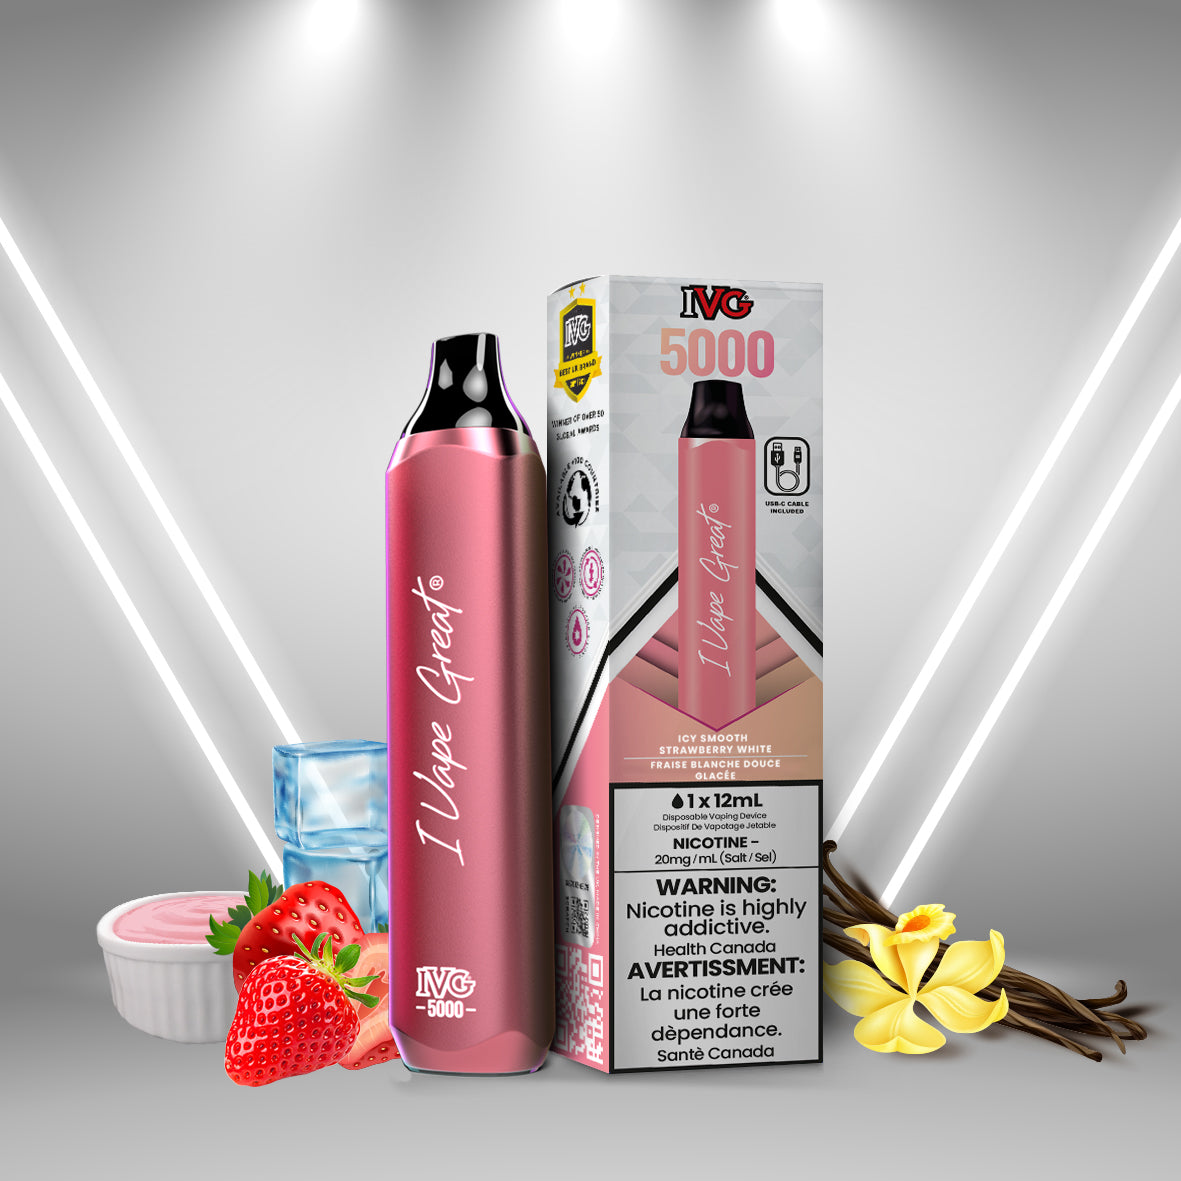 IVG 5000 Icy Smooth Strawberry White/Creamy Strawberry Vanilla Ice